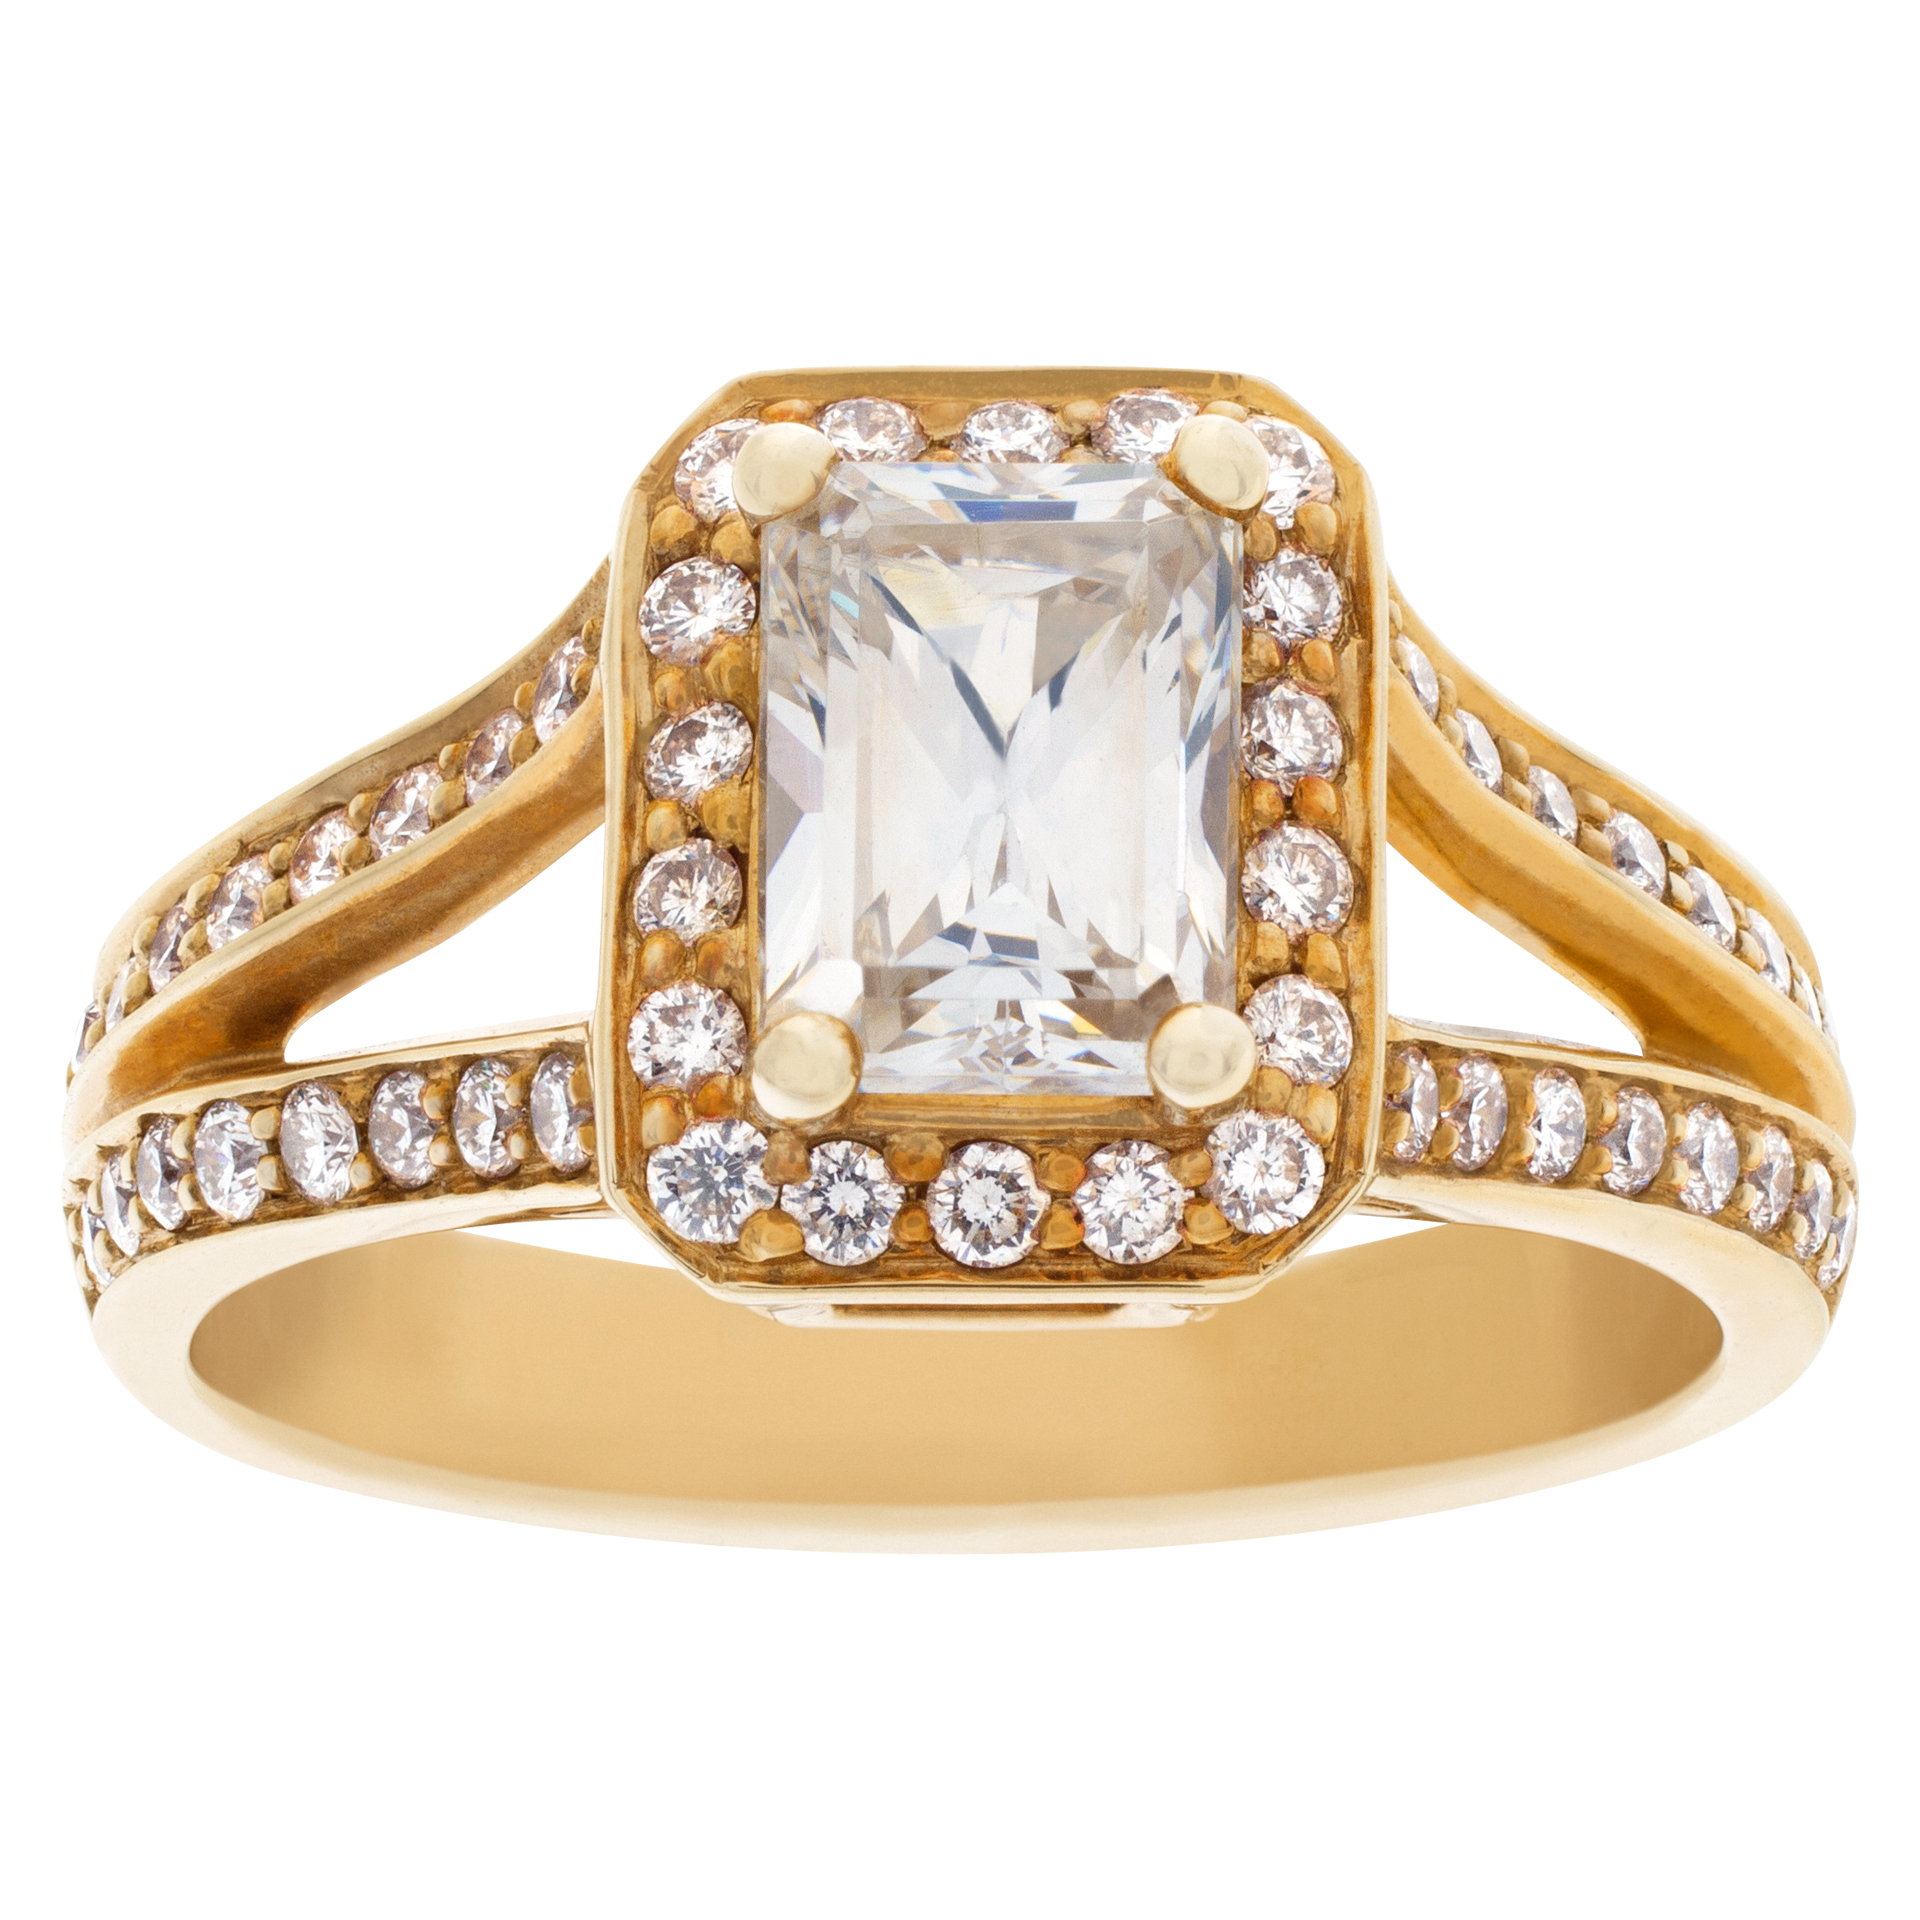 Beautiful Diamond ring in 14k yellow gold setting. 0.64 cts in diamonds. Size 7